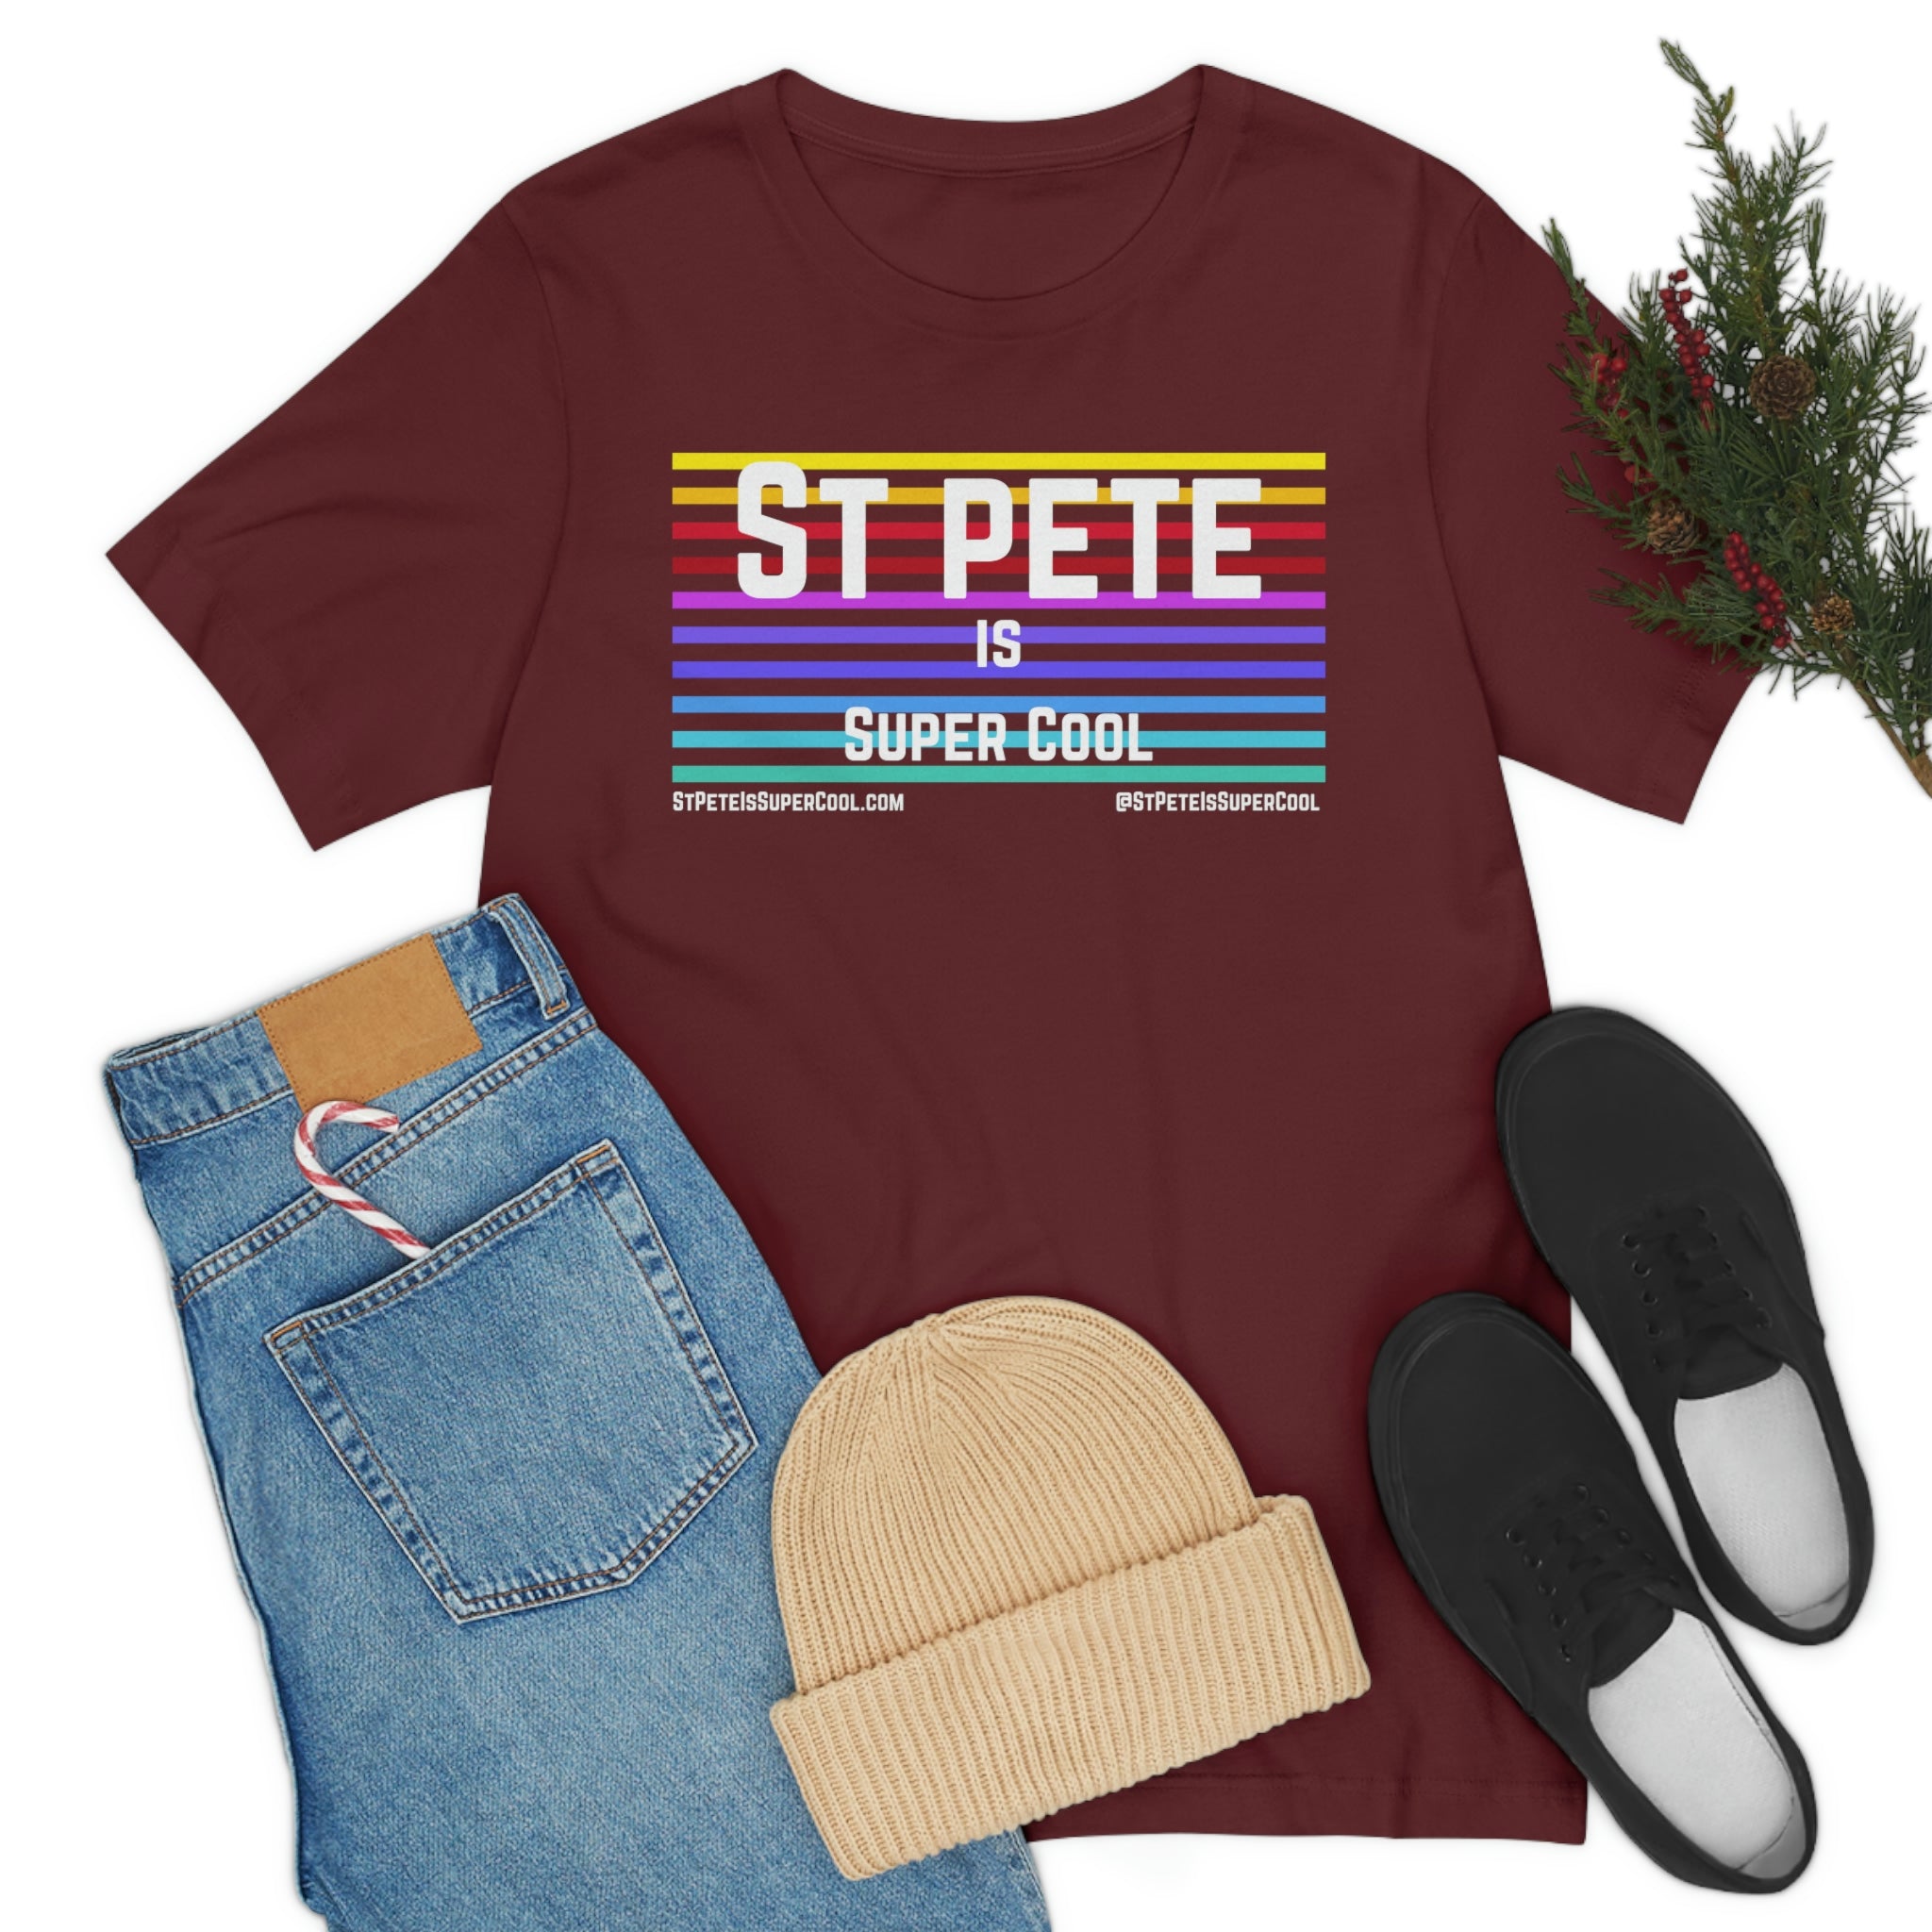 "Prideful St Pete" Tee